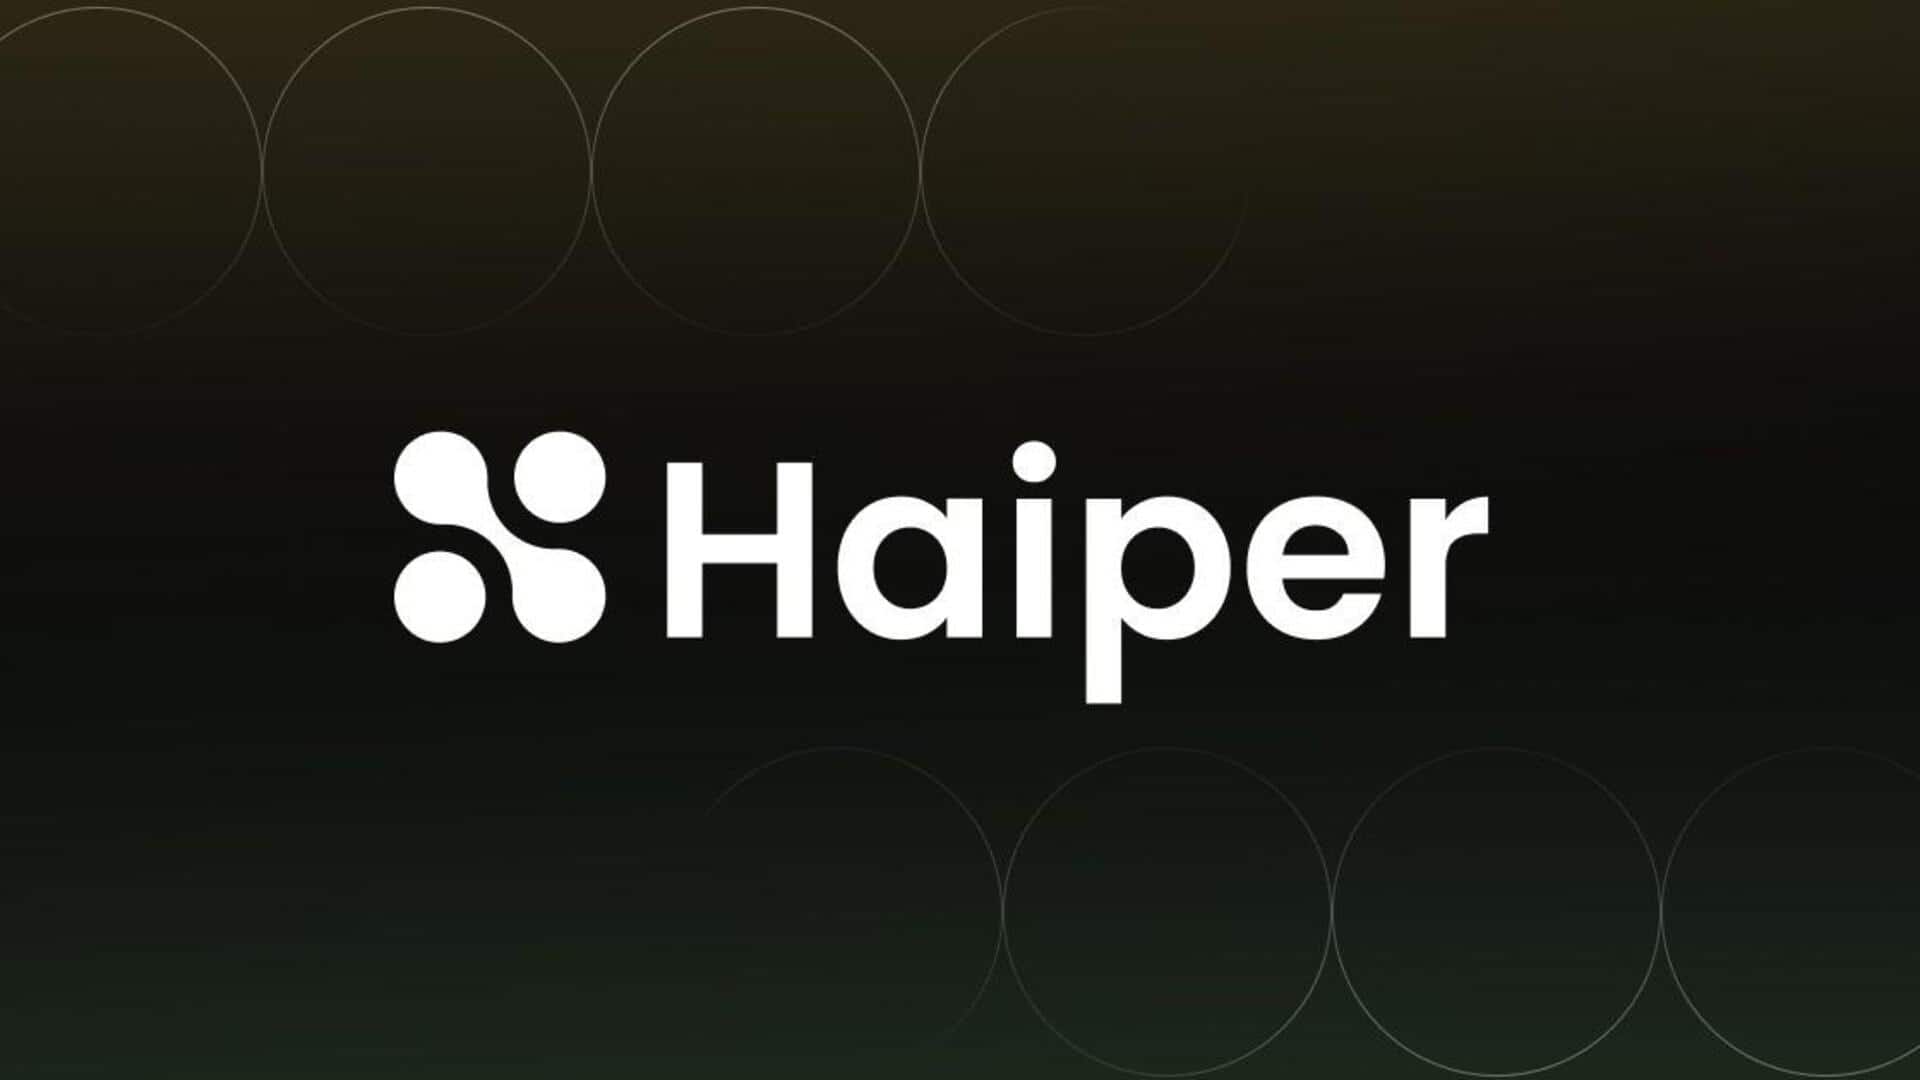 Google DeepMind alums launch AI video generation tool called Haiper